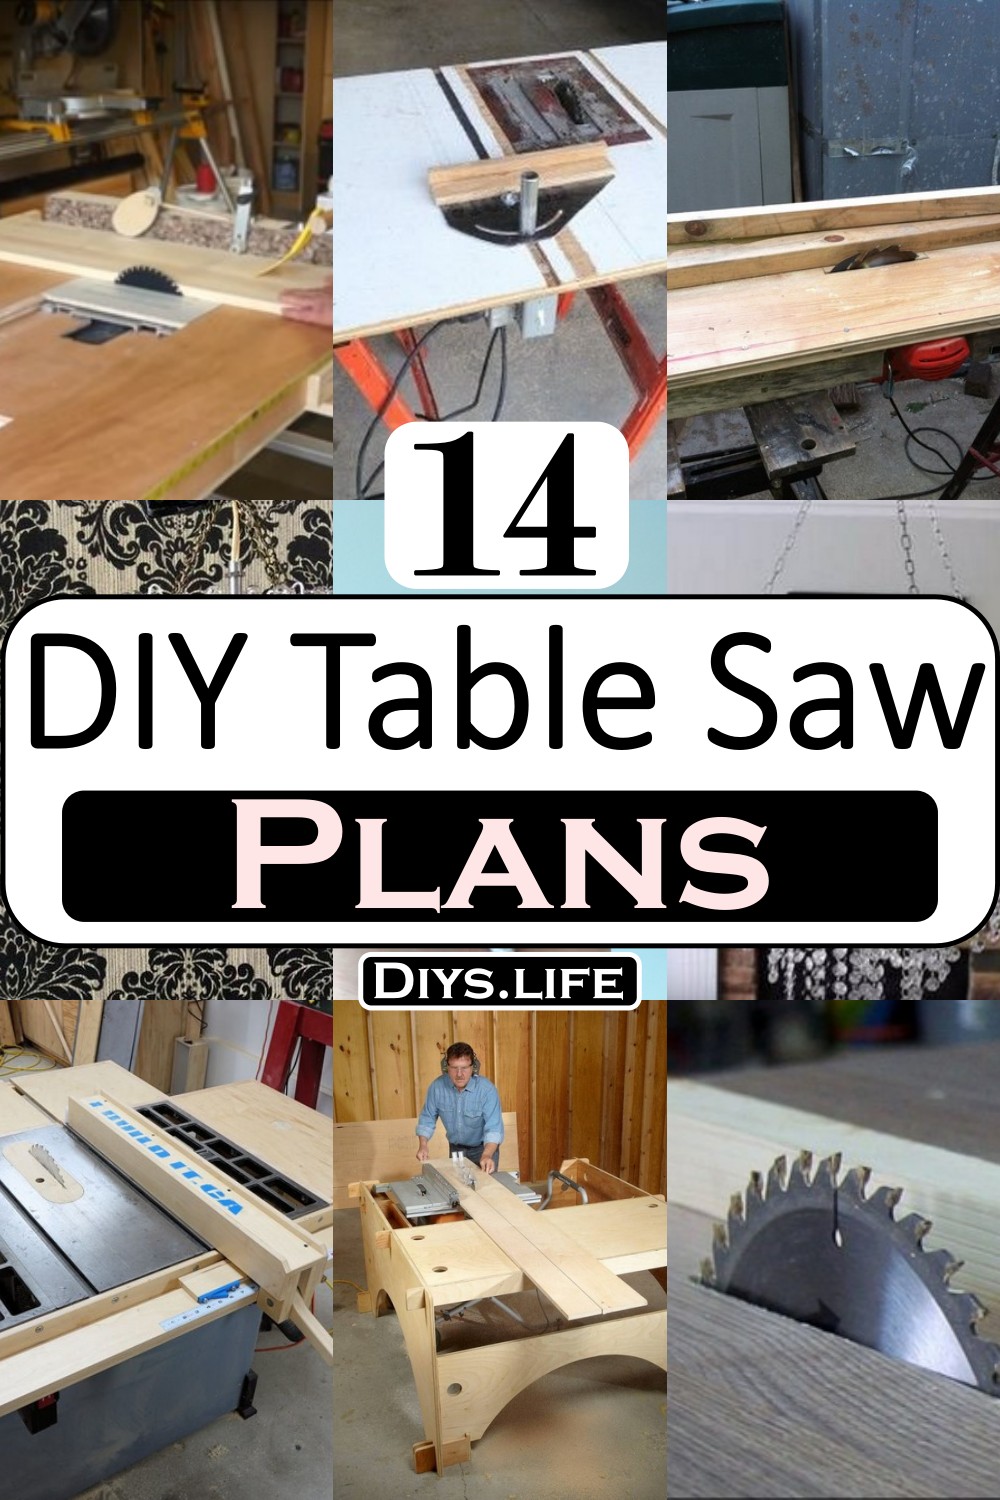 DIY Table Saw Plans